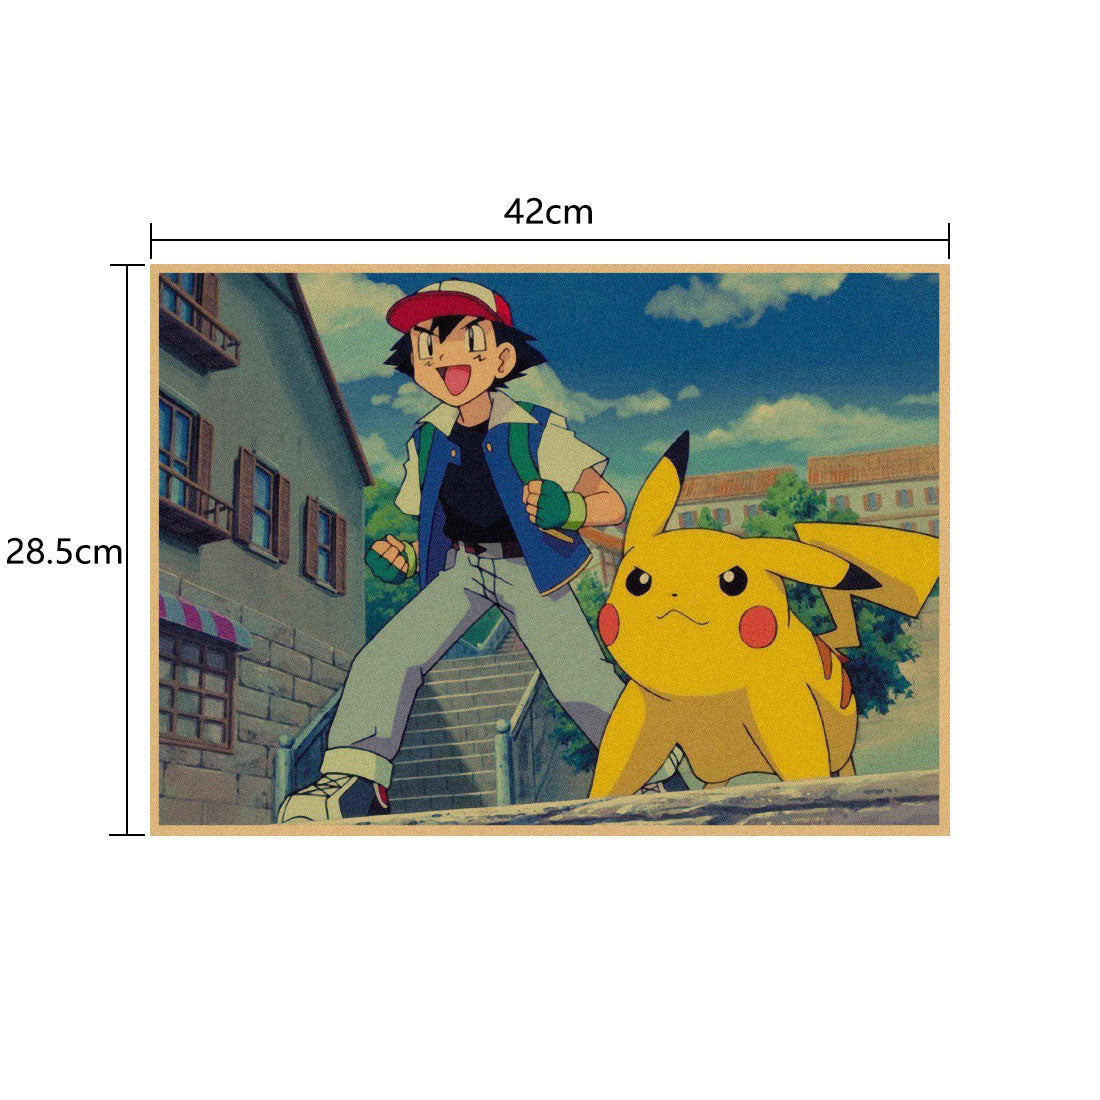 Pokémon Affisch Pikachu